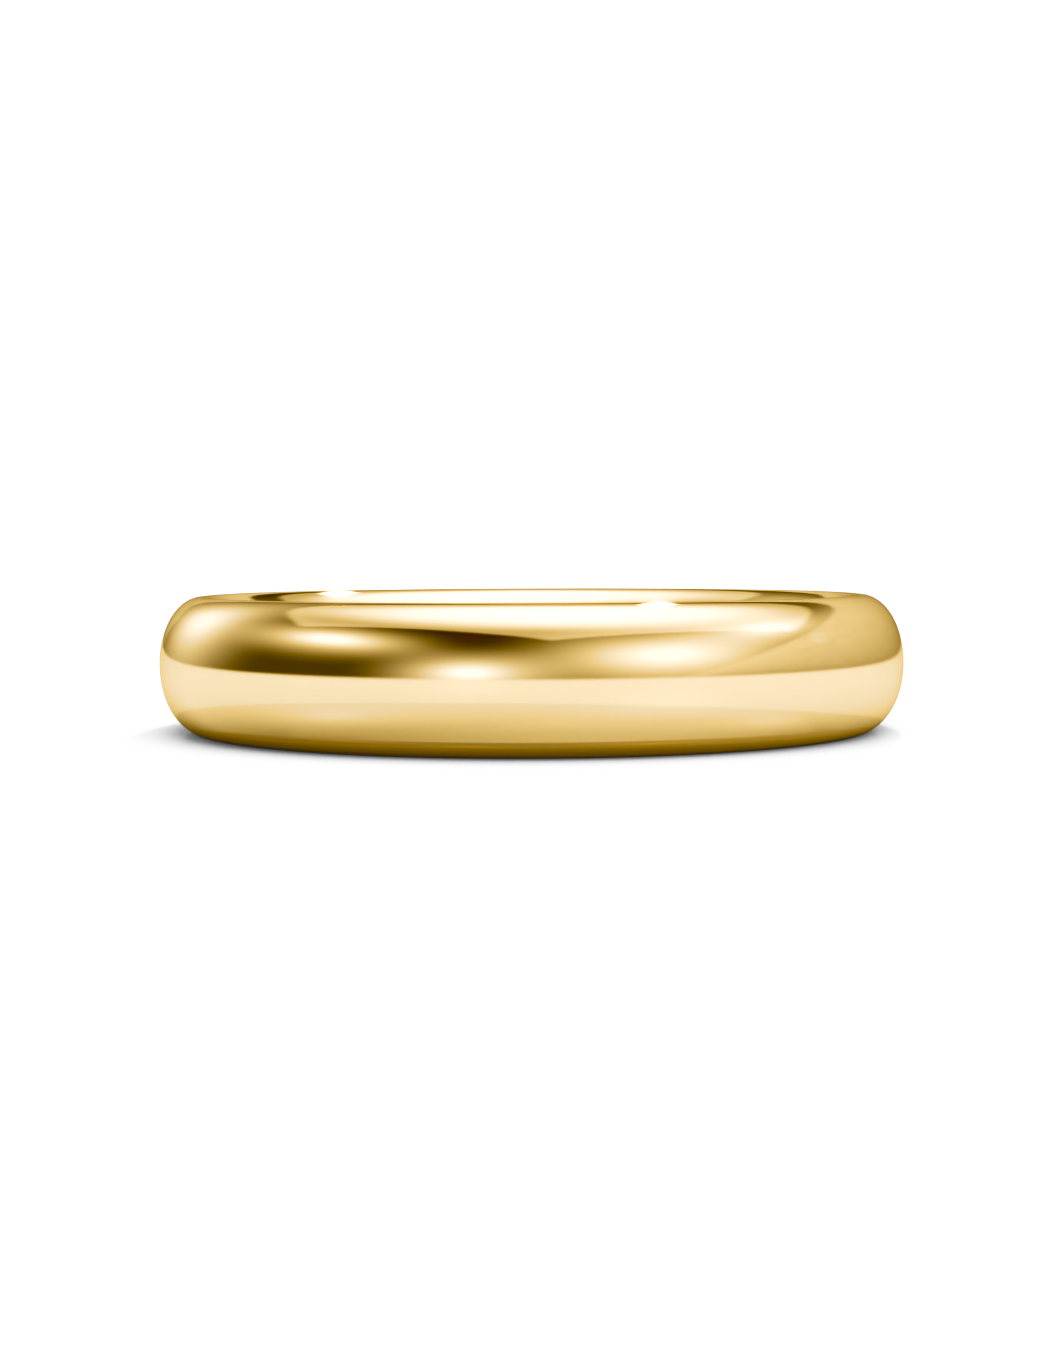 Harmony Ring 14k / 18k Gold - 4mm